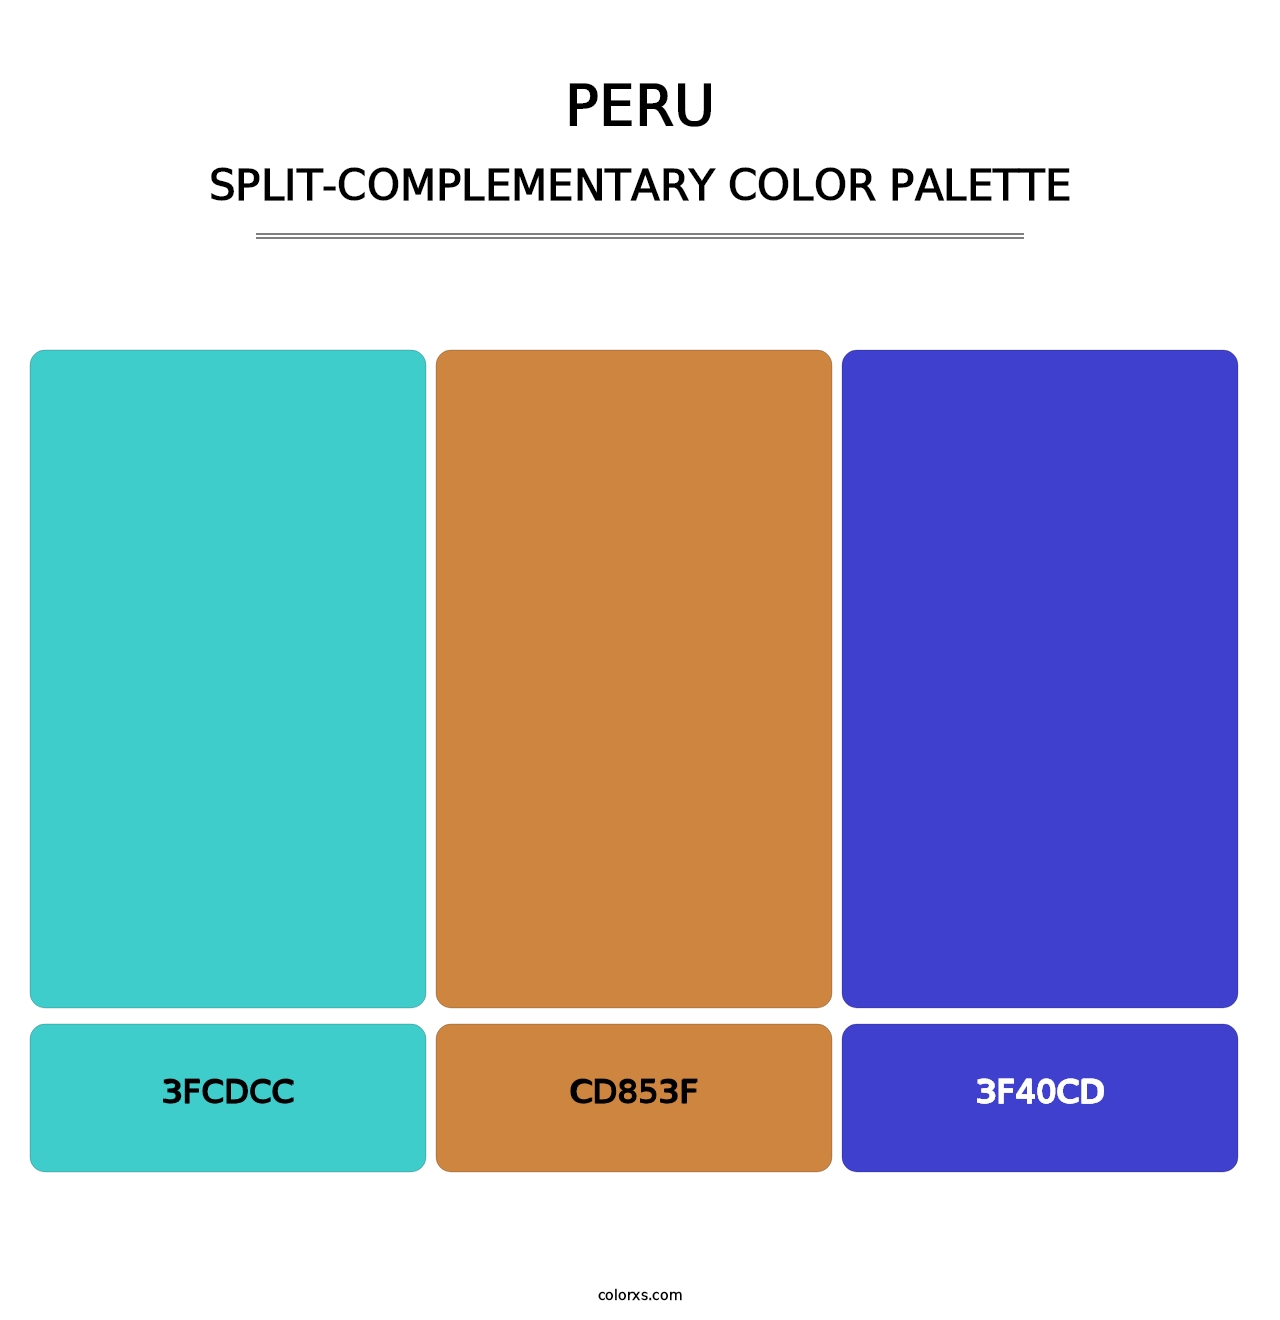 Peru - Split-Complementary Color Palette